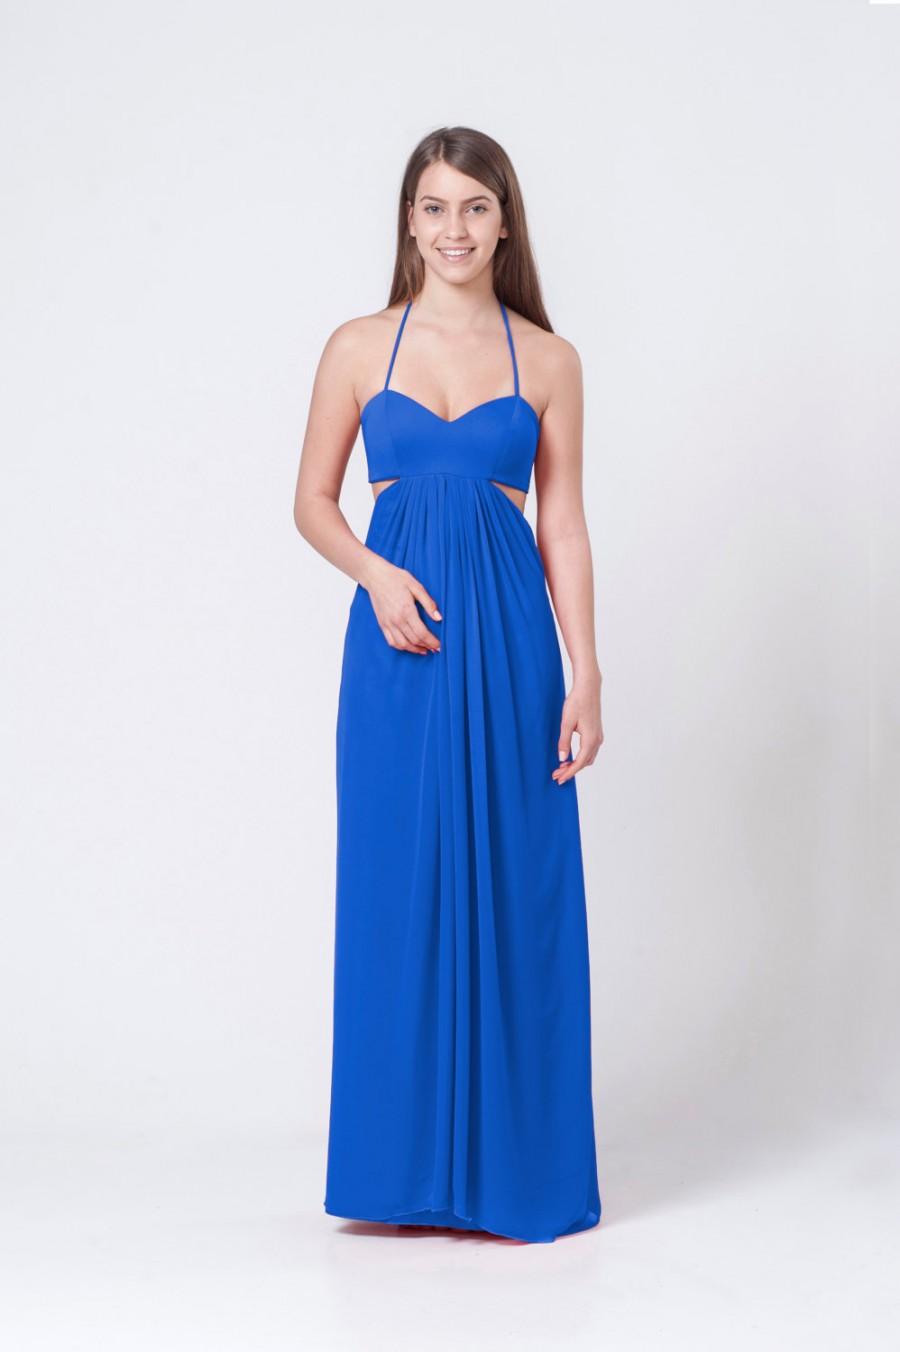 Mariage - Royal Blue Woman Dress, Maxi Dress, Party Dress for Women, Long Dress, Chiffon Dress, Cocktail Dress, Elegant Dress, Open Back Dress, Gown